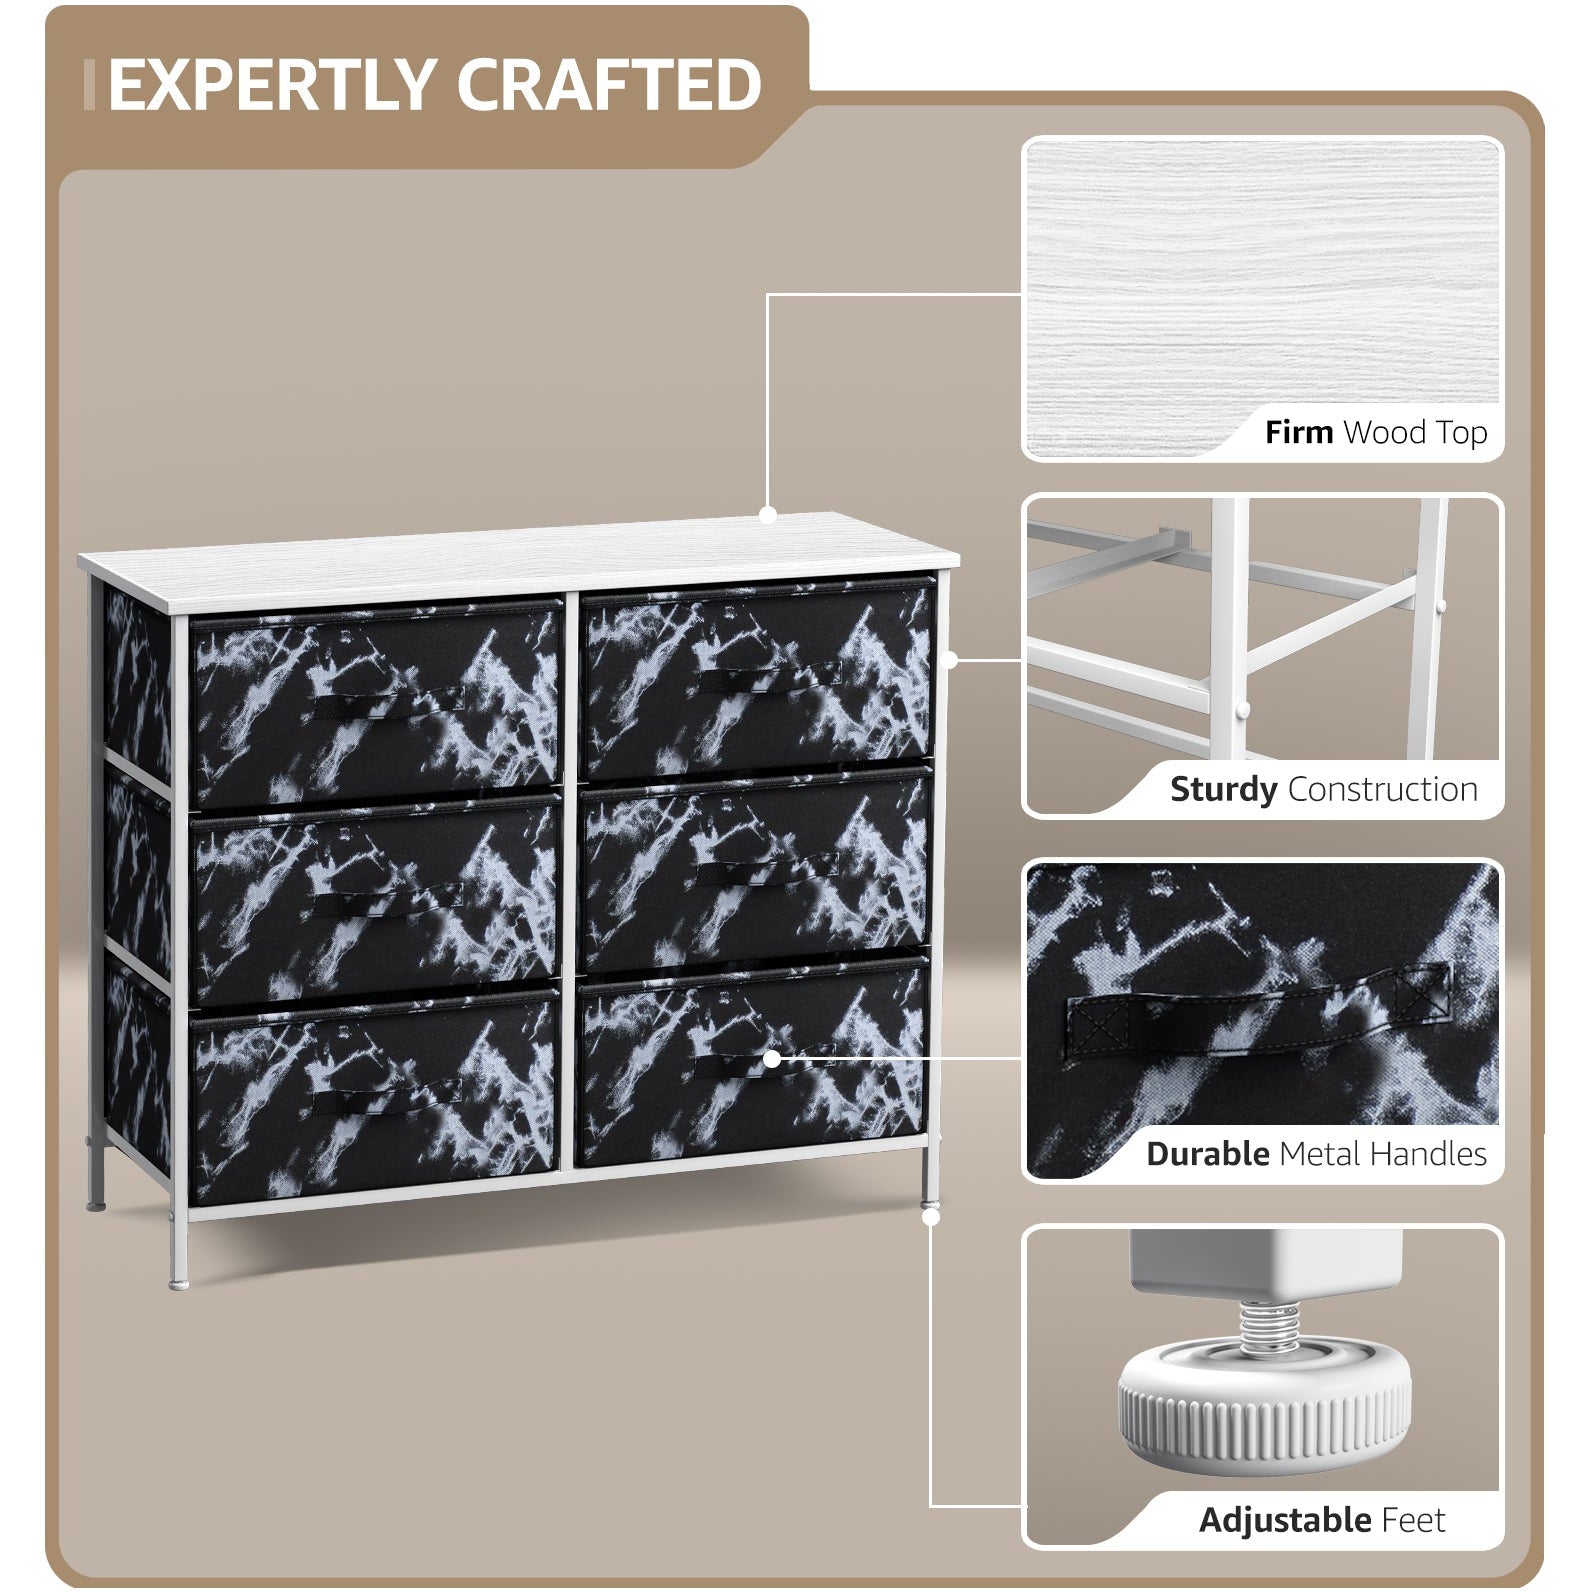 Sorbus 8 Drawer Fabric Dresser for Bedroom, home & office